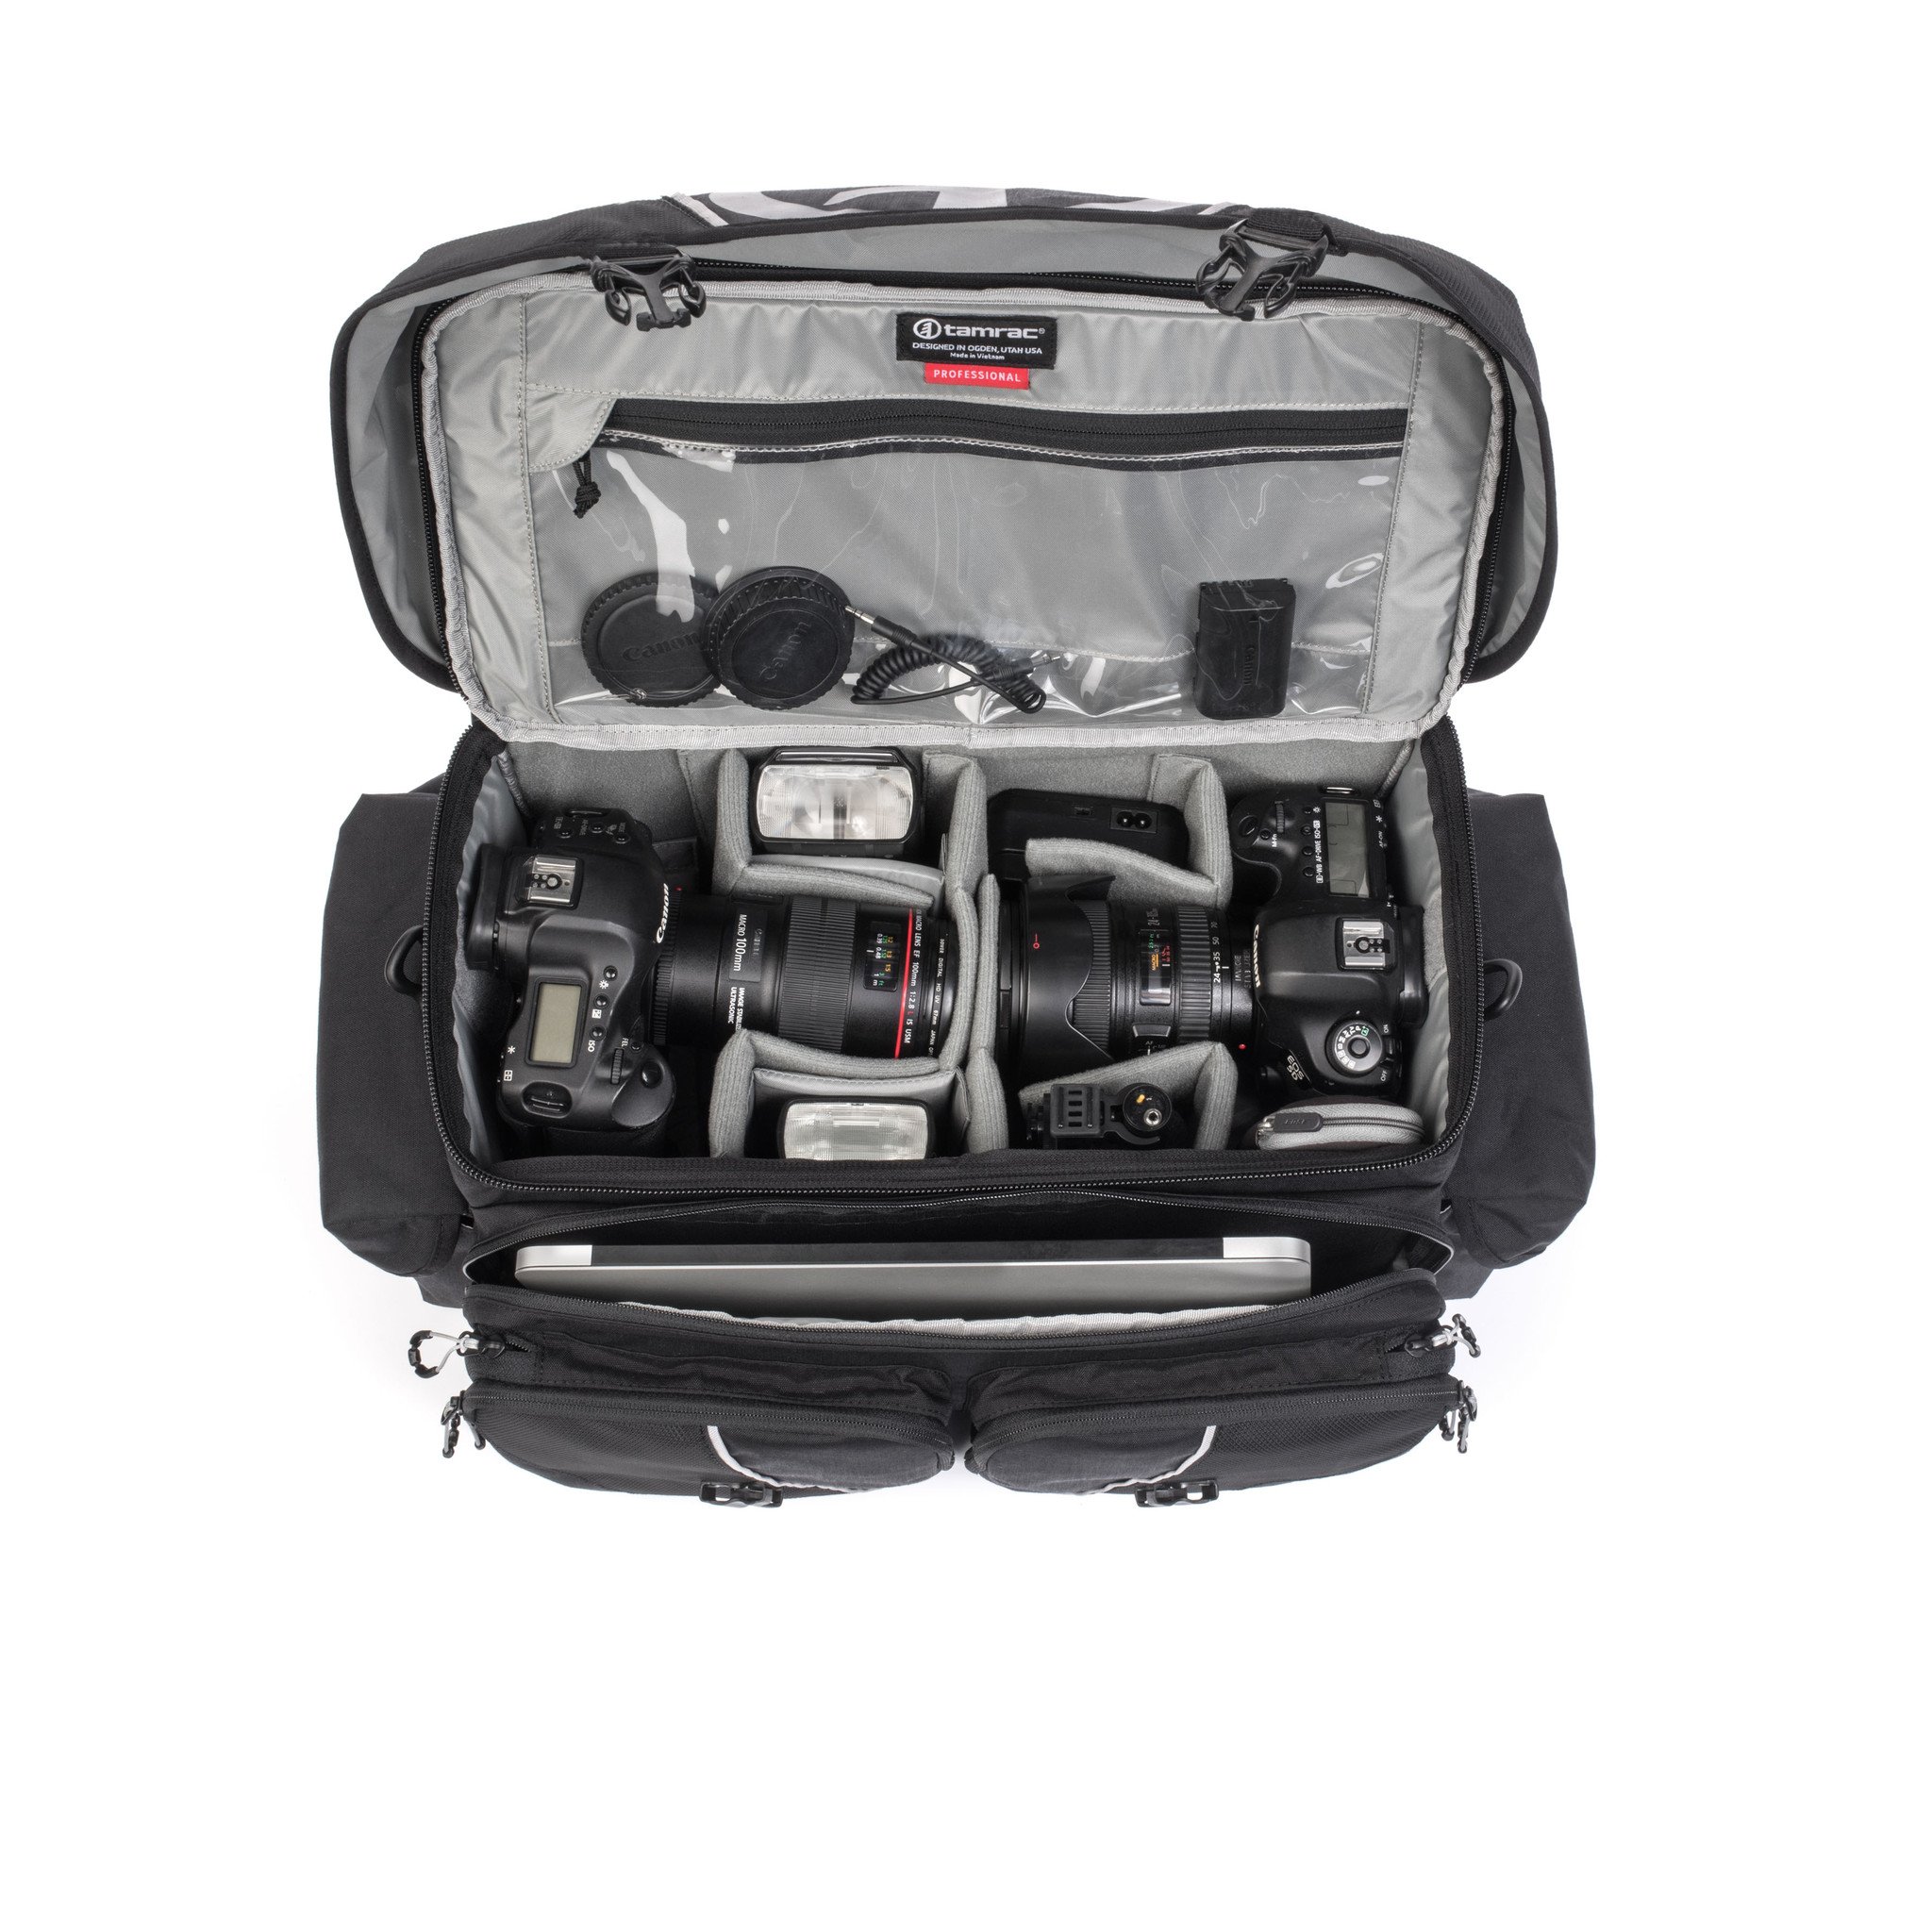 Tamrac Stratus 21 Professional Camera Bag - Free Shipping - TAMRAC